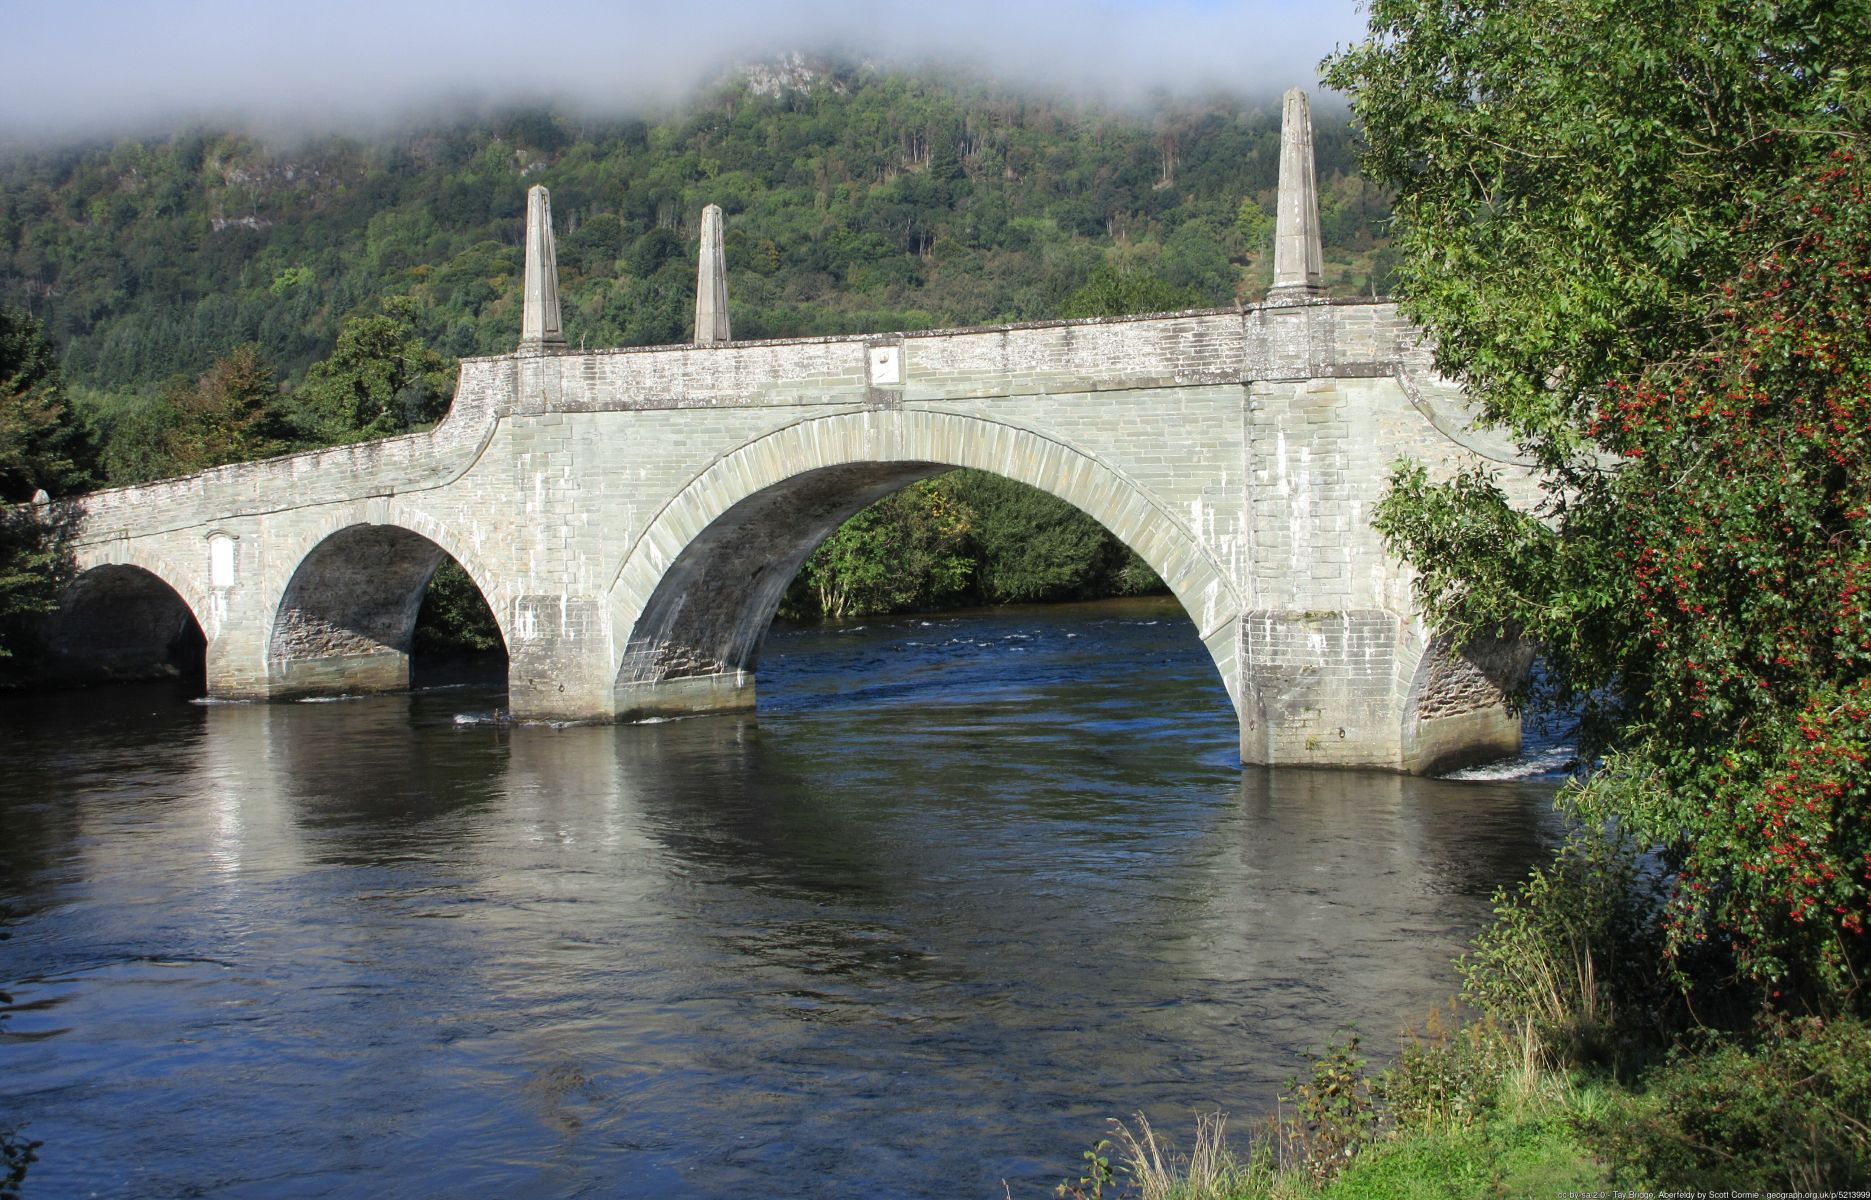 General Wade Bridge over River Tay at Aberfeldy